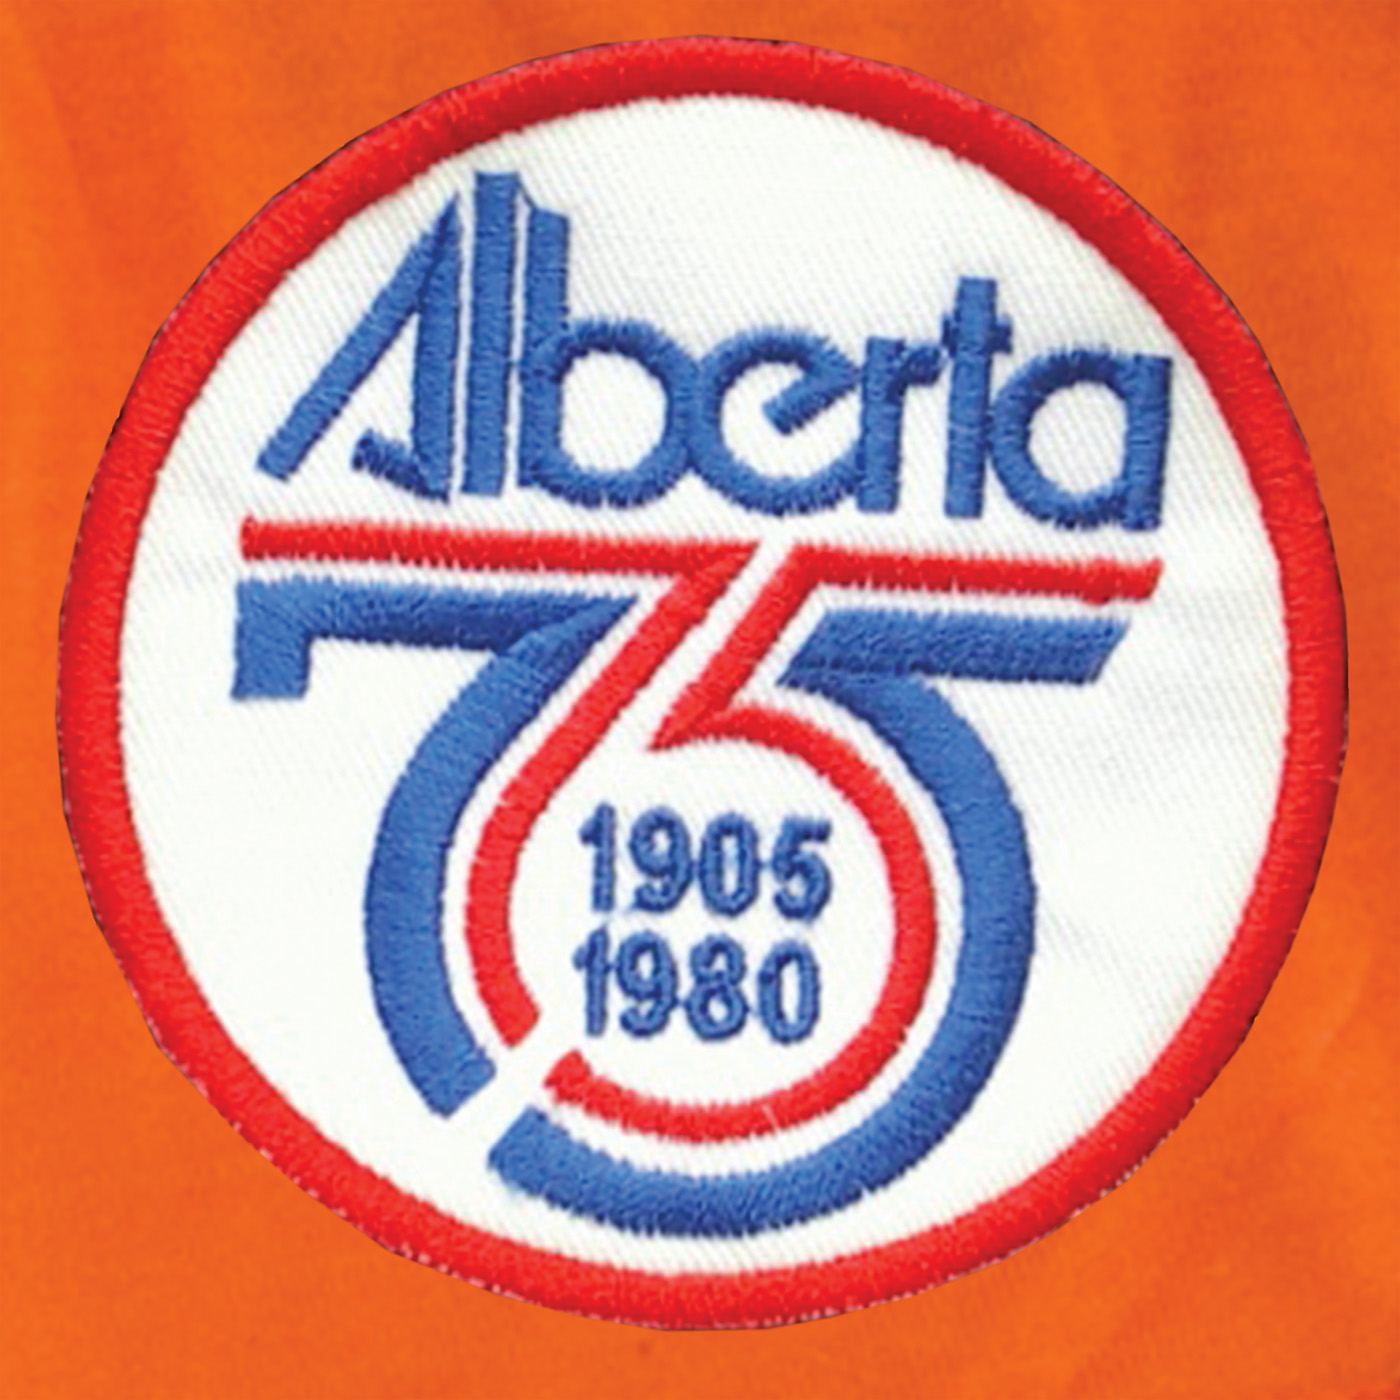 Edmonton Oilers 1980-1982 Wayne Gretzky Hockey Jersey (36/Small